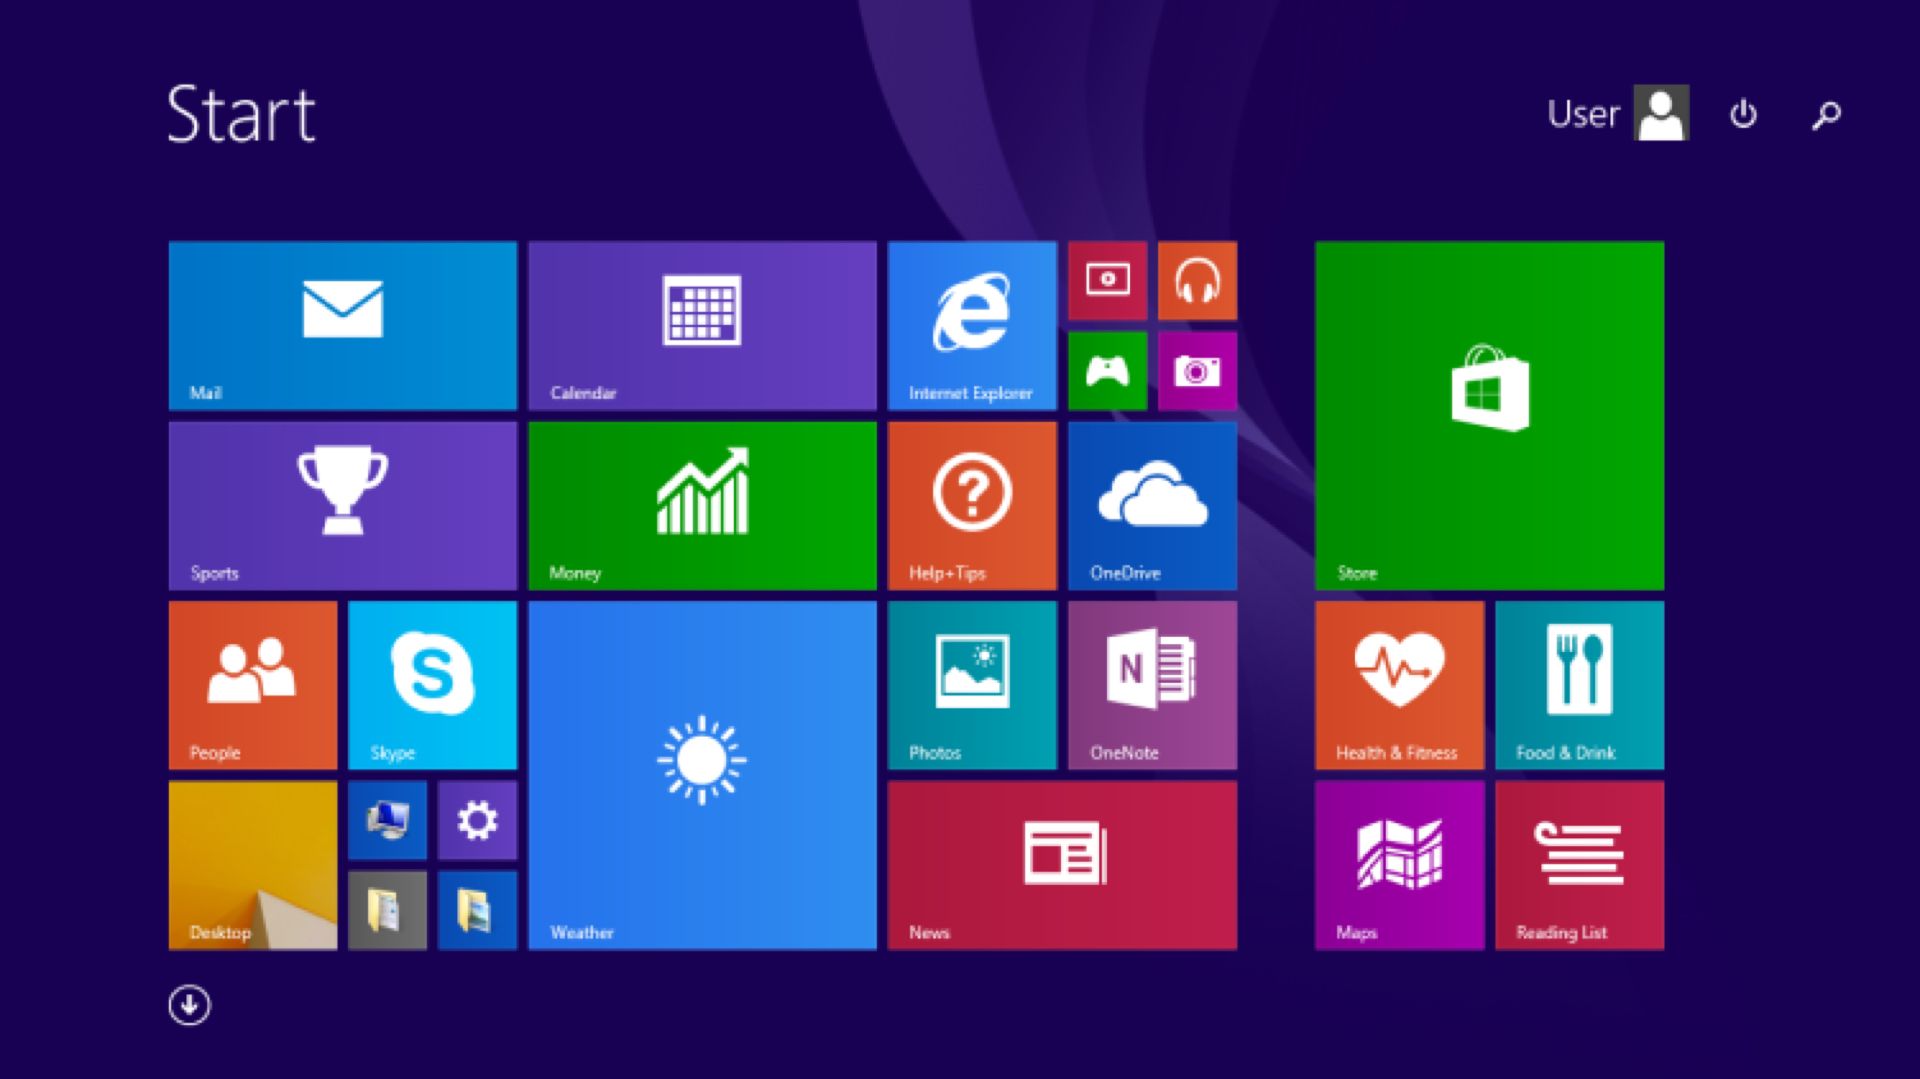 Windows 8.1 start screen and menu